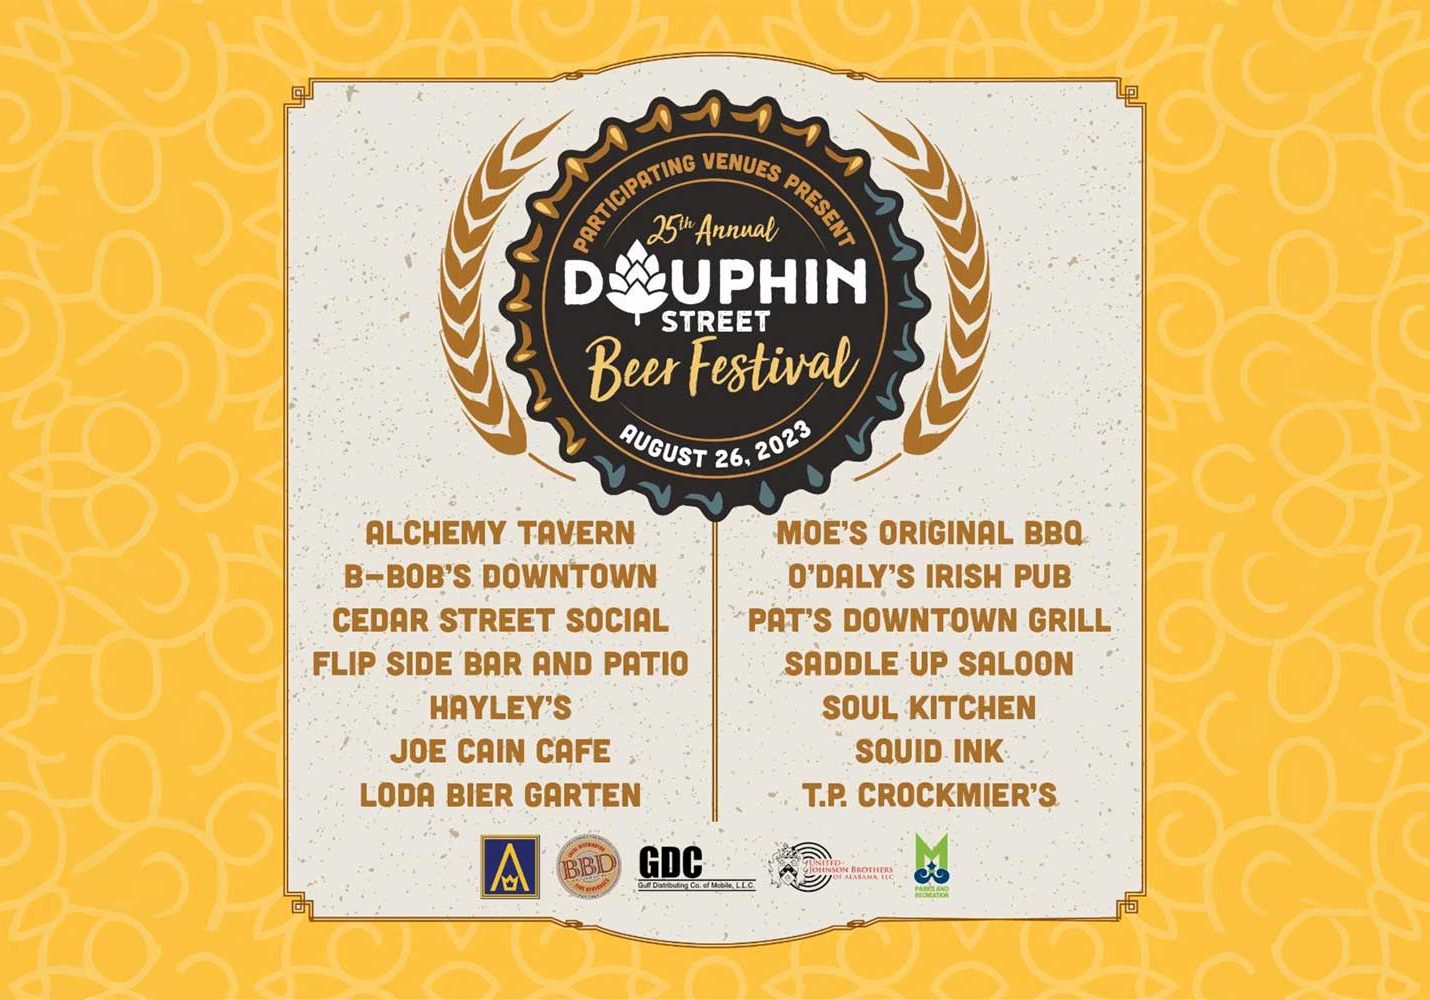 Dauphin Street Beer Festival Tickets On Sale